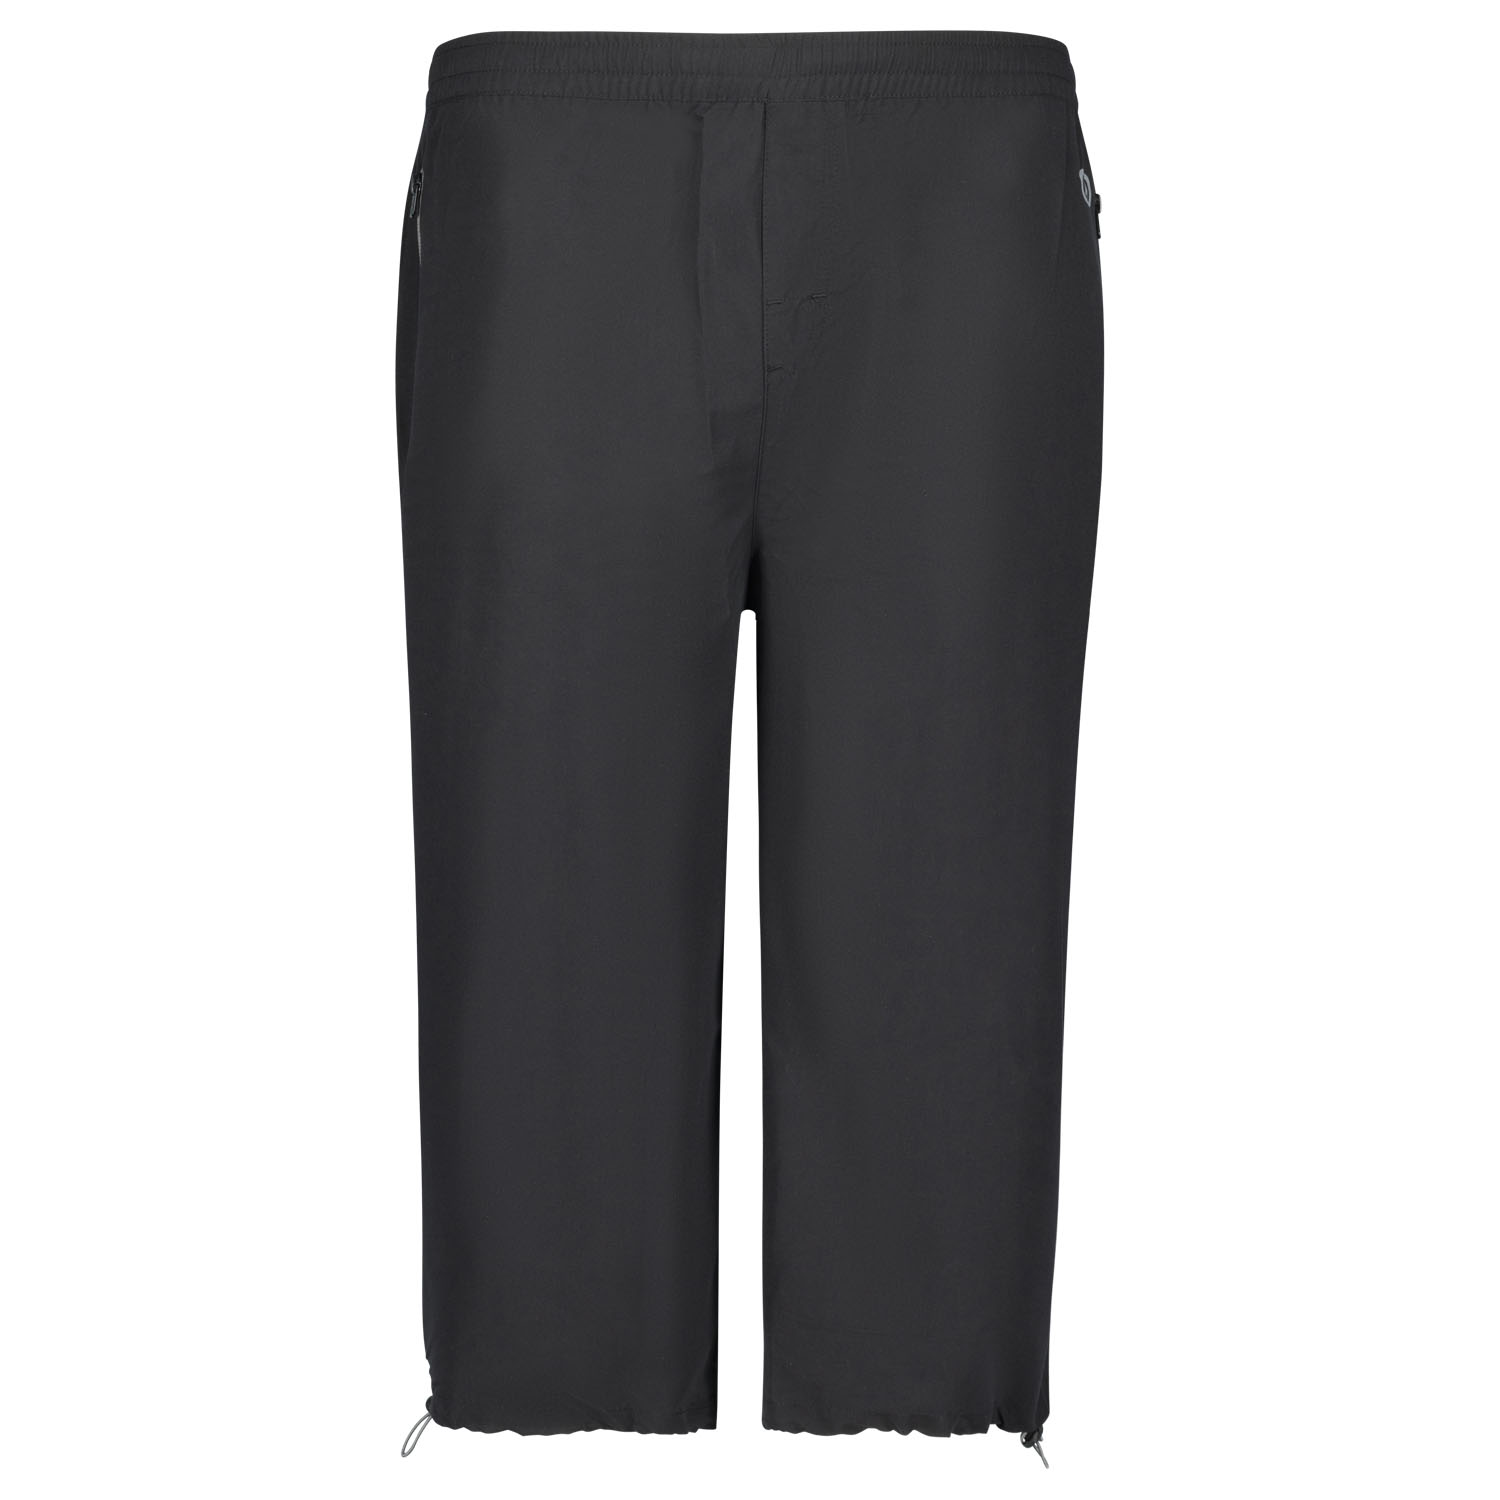 Capri pants in black for men by Adamo series "Oskar" in oversizes up to 14XL